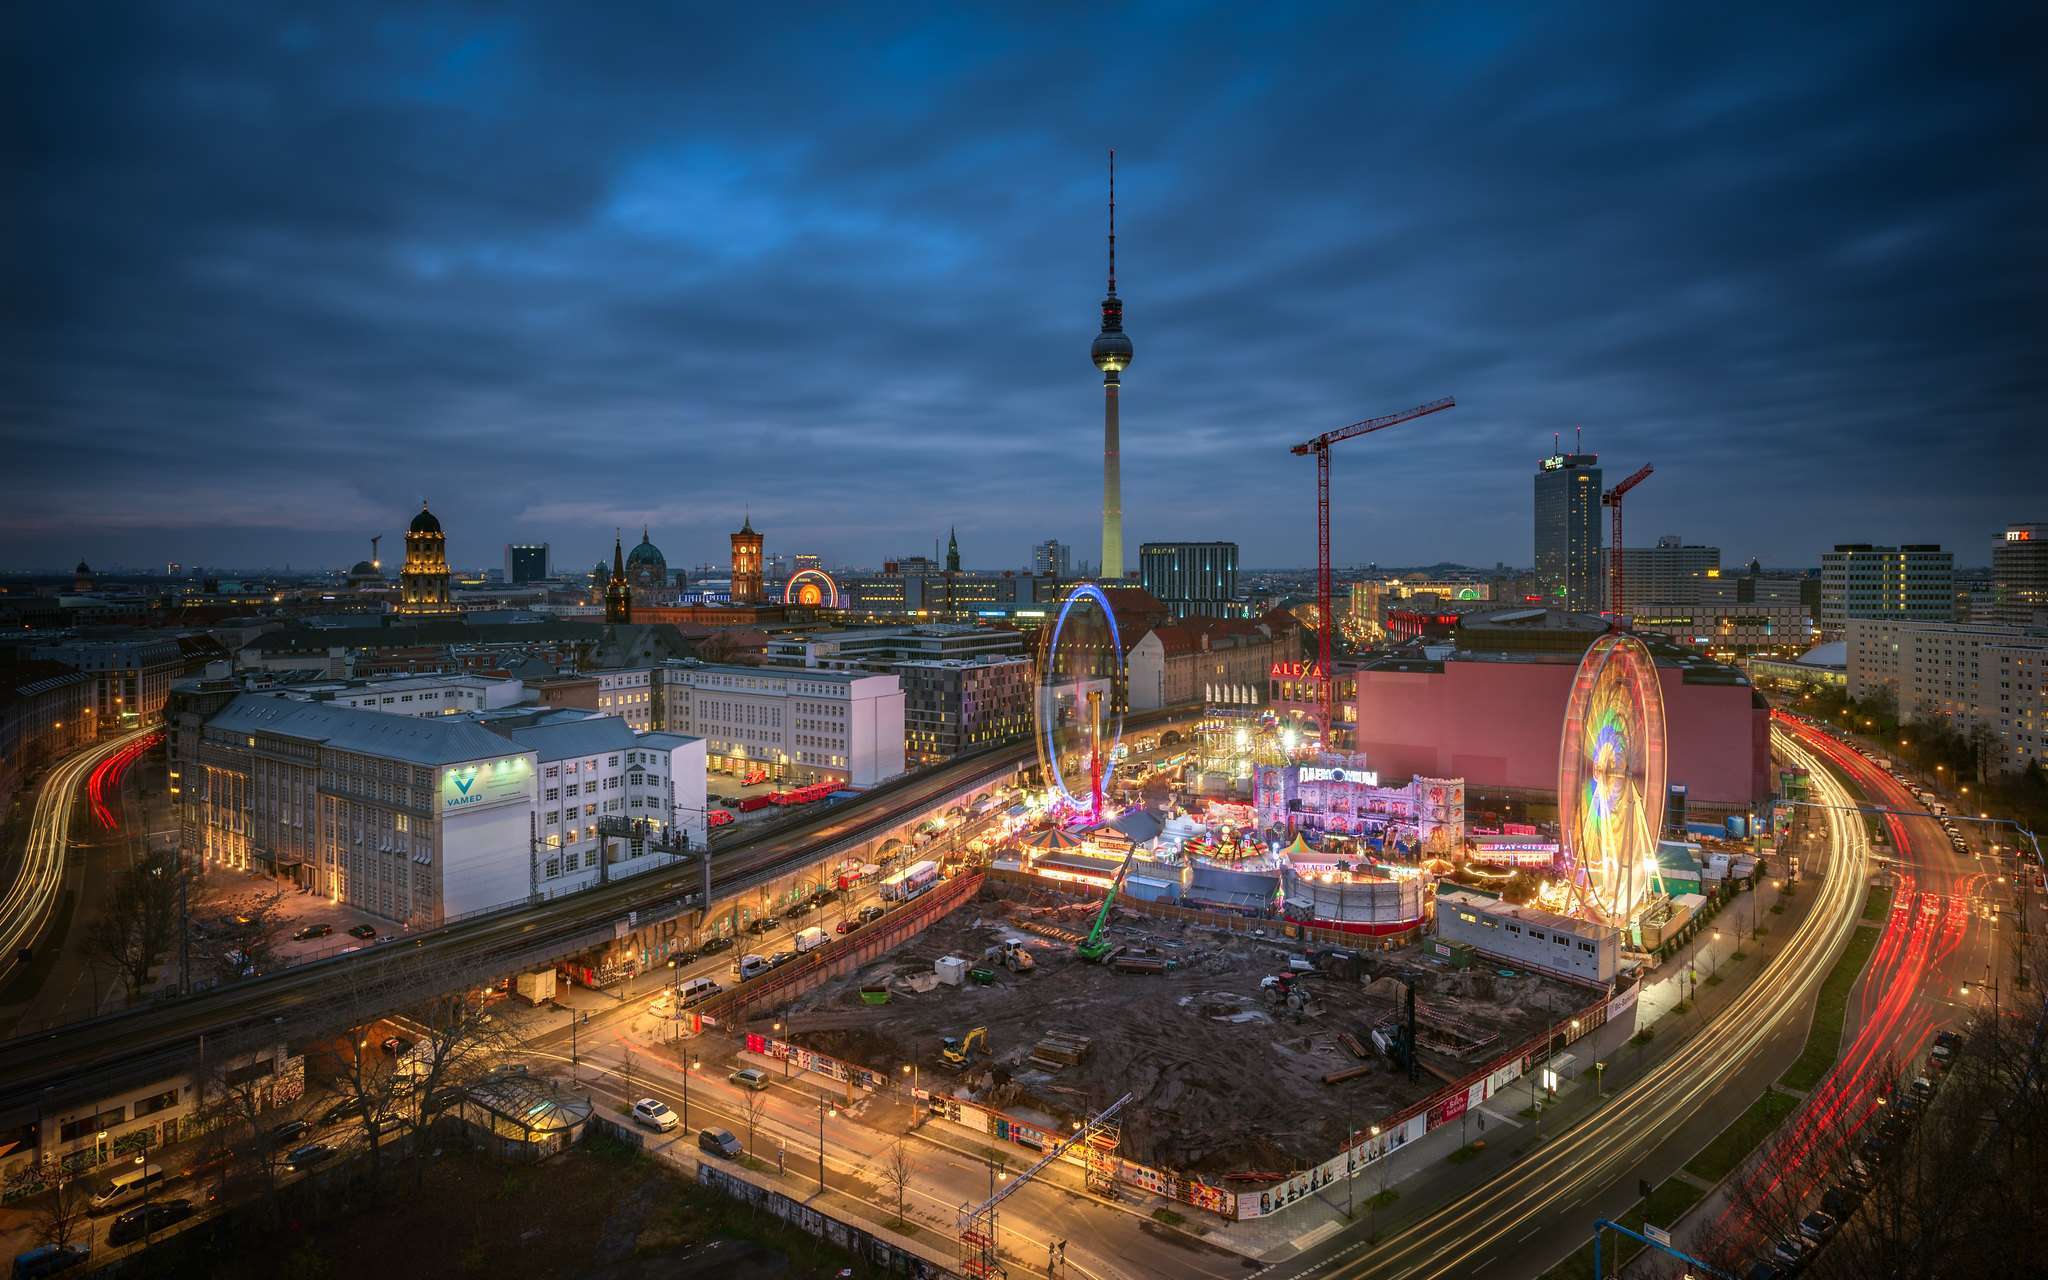 General 2048x1280 city cityscape night lights light trails sky carnivals railway building urban photography dark Berlin